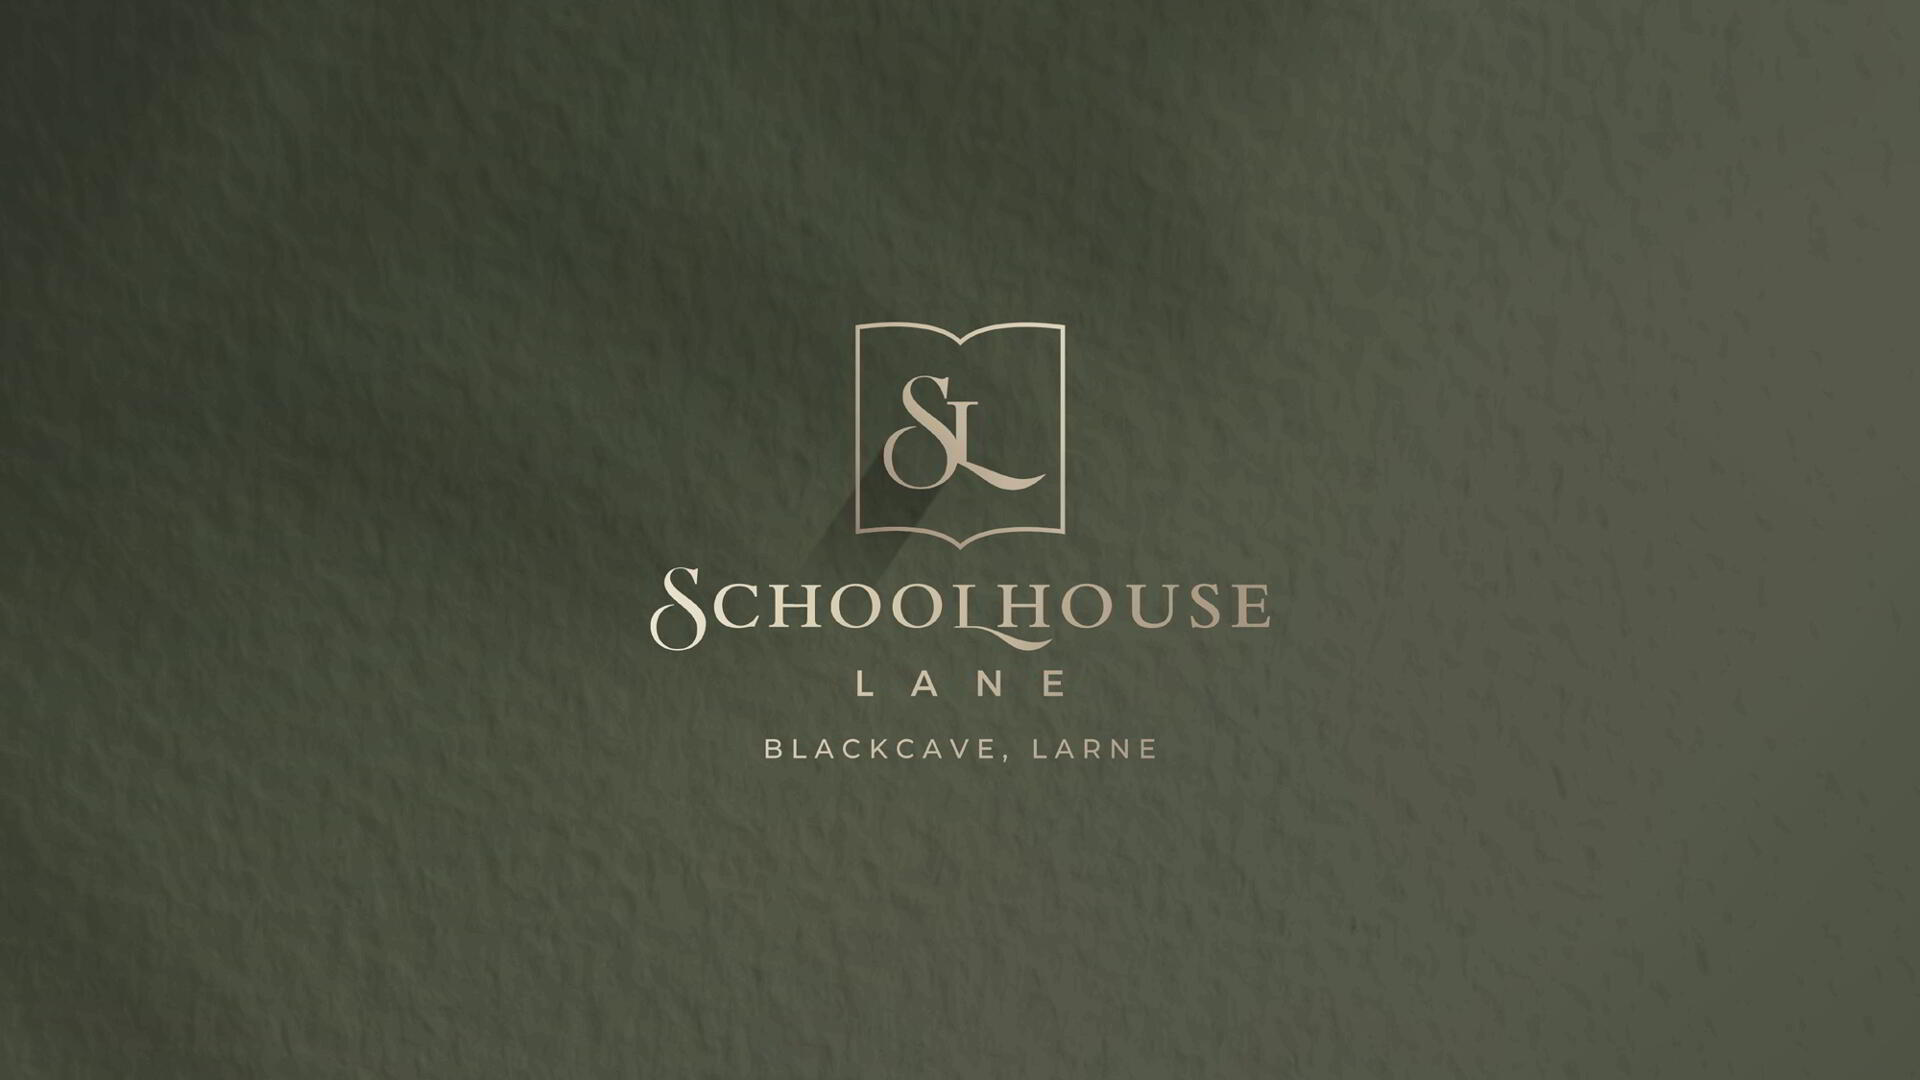 SchoolHouse Lane, Larne